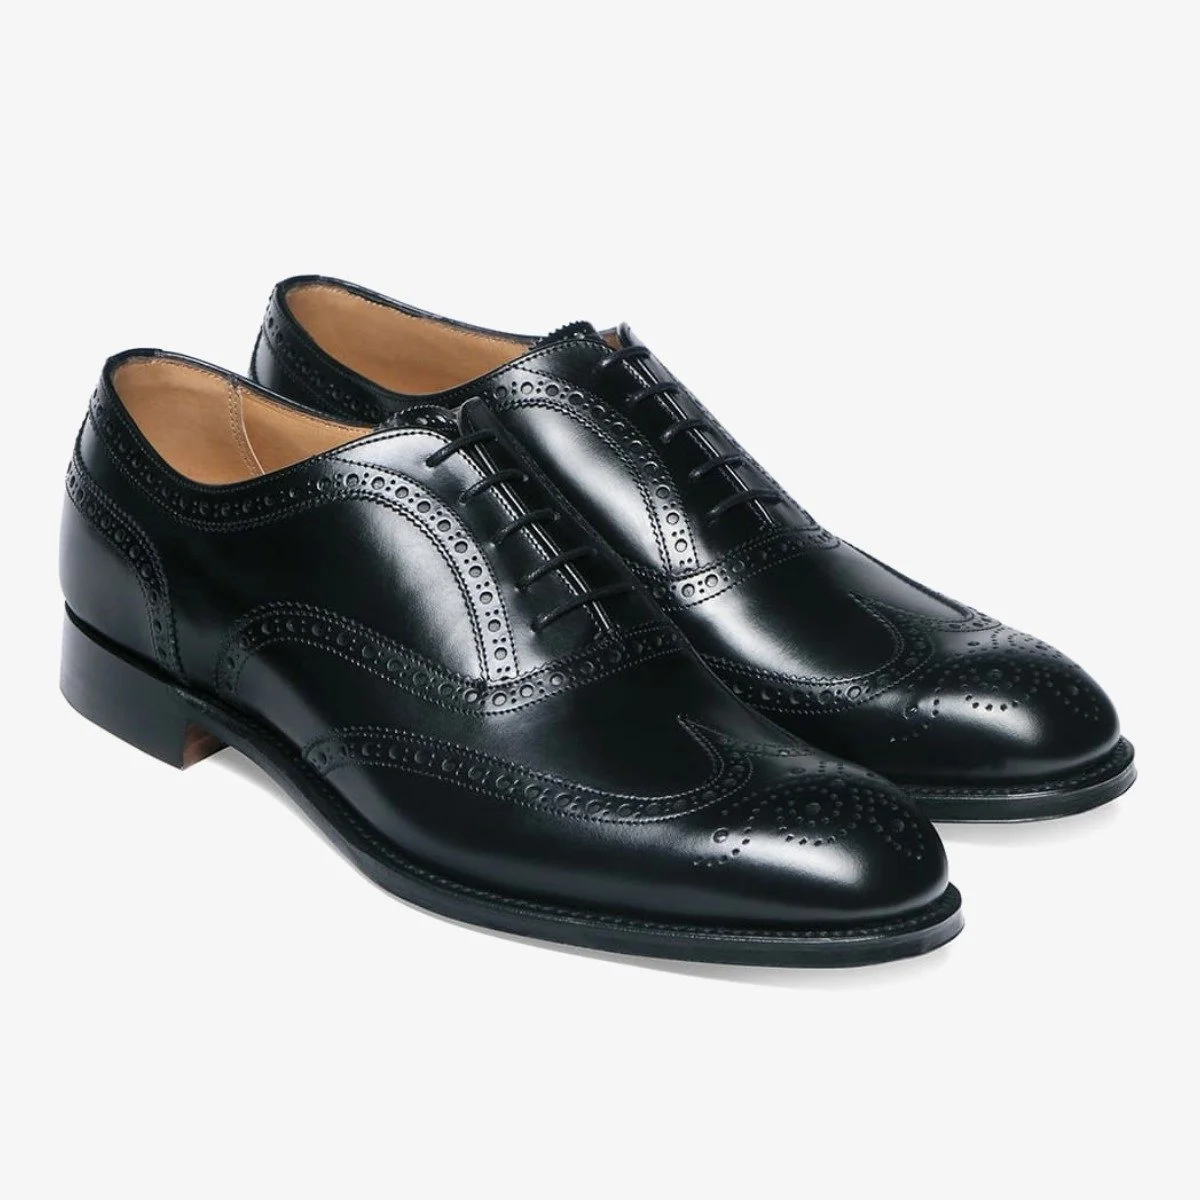 Cheaney Arthur III black brogue oxford shoes